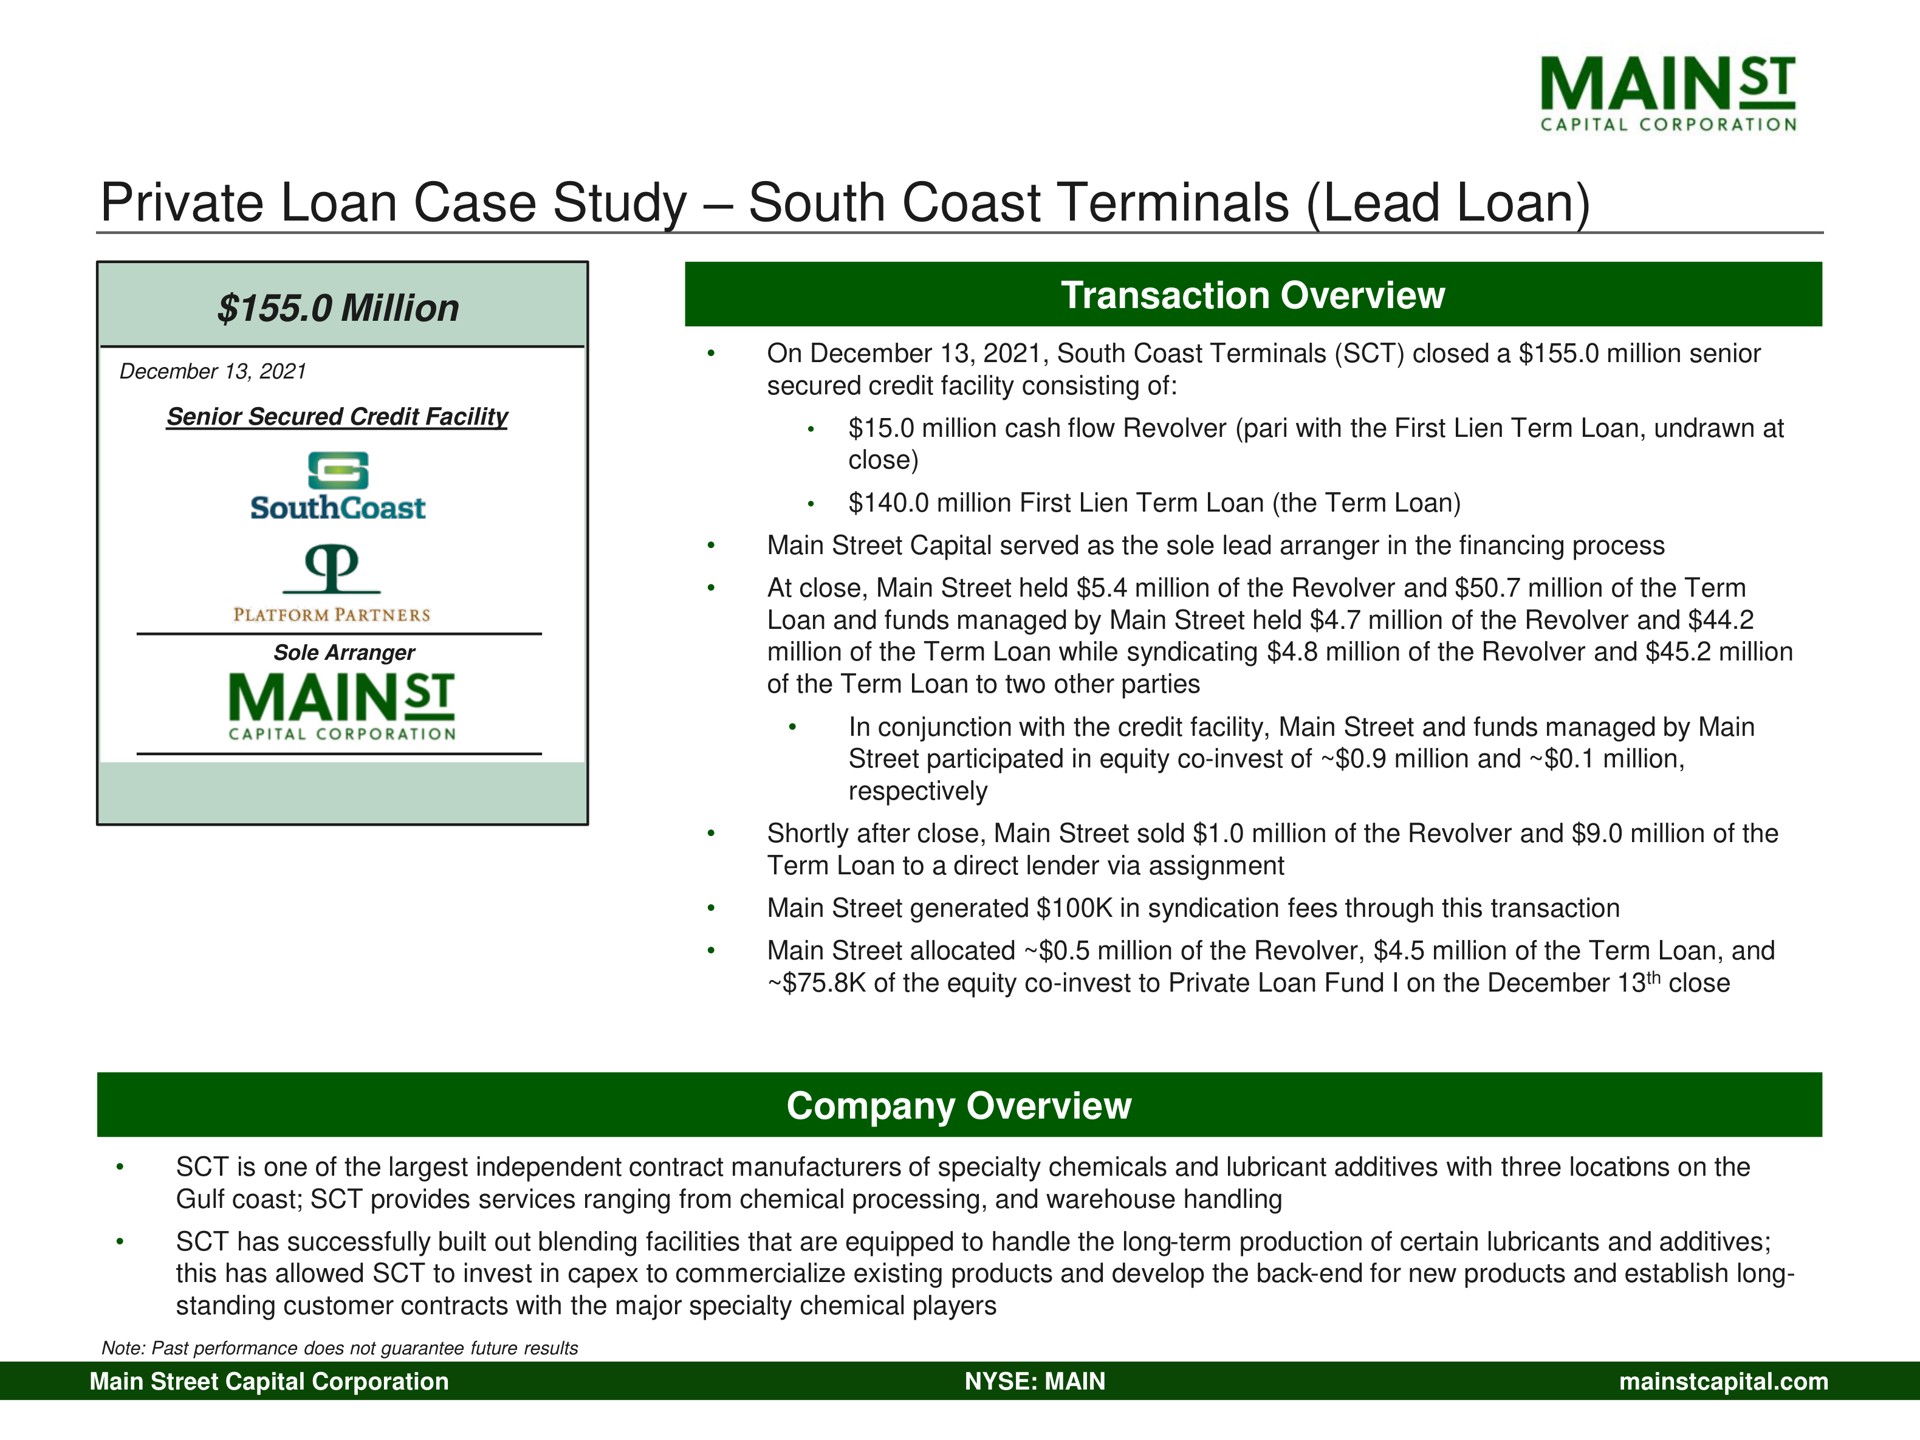 private loan case study south coast terminals lead loan mains mains | Main Street Capital